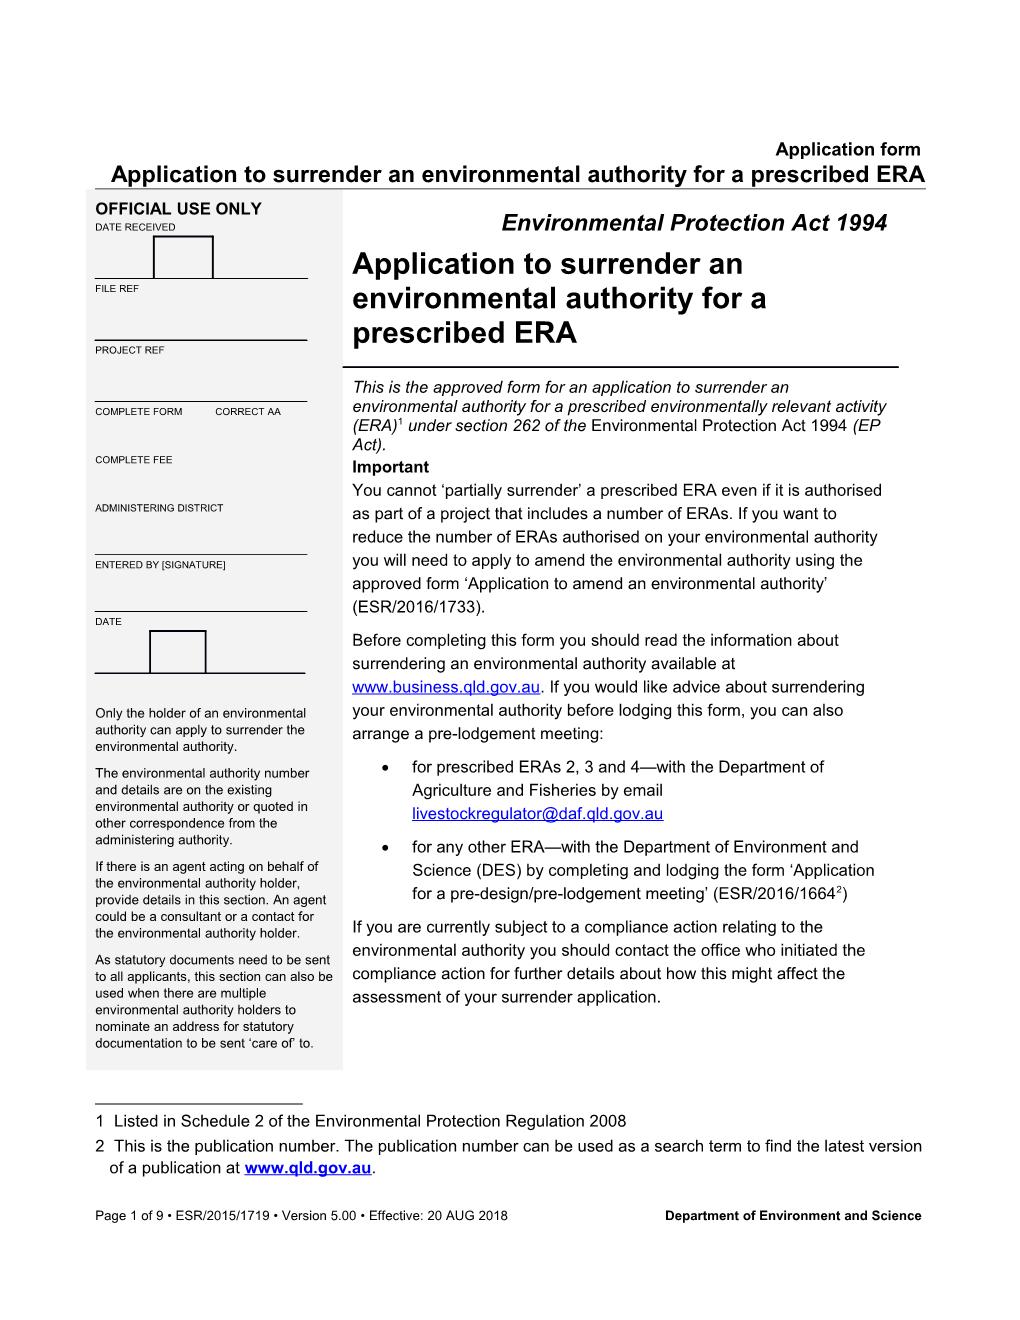 Application to Surrender an Environmental Authority for a Prescribed ERA